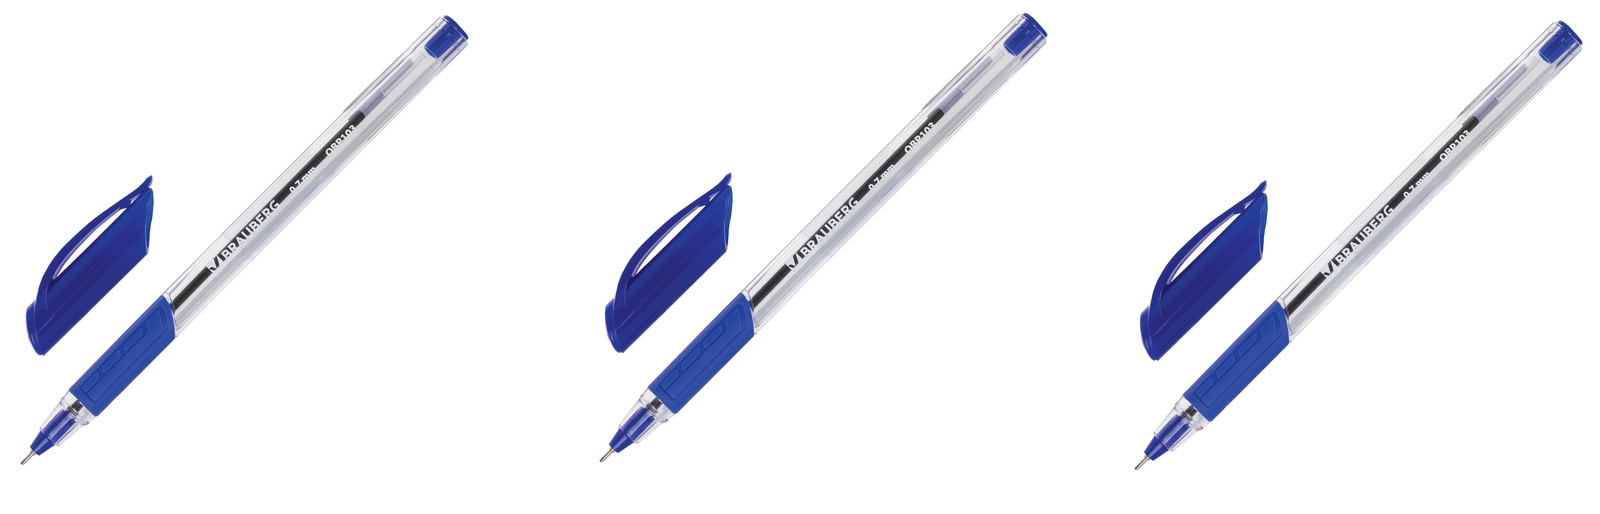 Brauberg 0.7. BRAUBERG obp119 ручка шариковая. Ручка шариковая масляная BRAUBERG Extra Glide Soft White, синяя, 0,7мм, линия 0,35мм, 142927. Ручки БРАУБЕРГ 0.7 мм. Ручка БРАУБЕРГ 0.7 масляная.